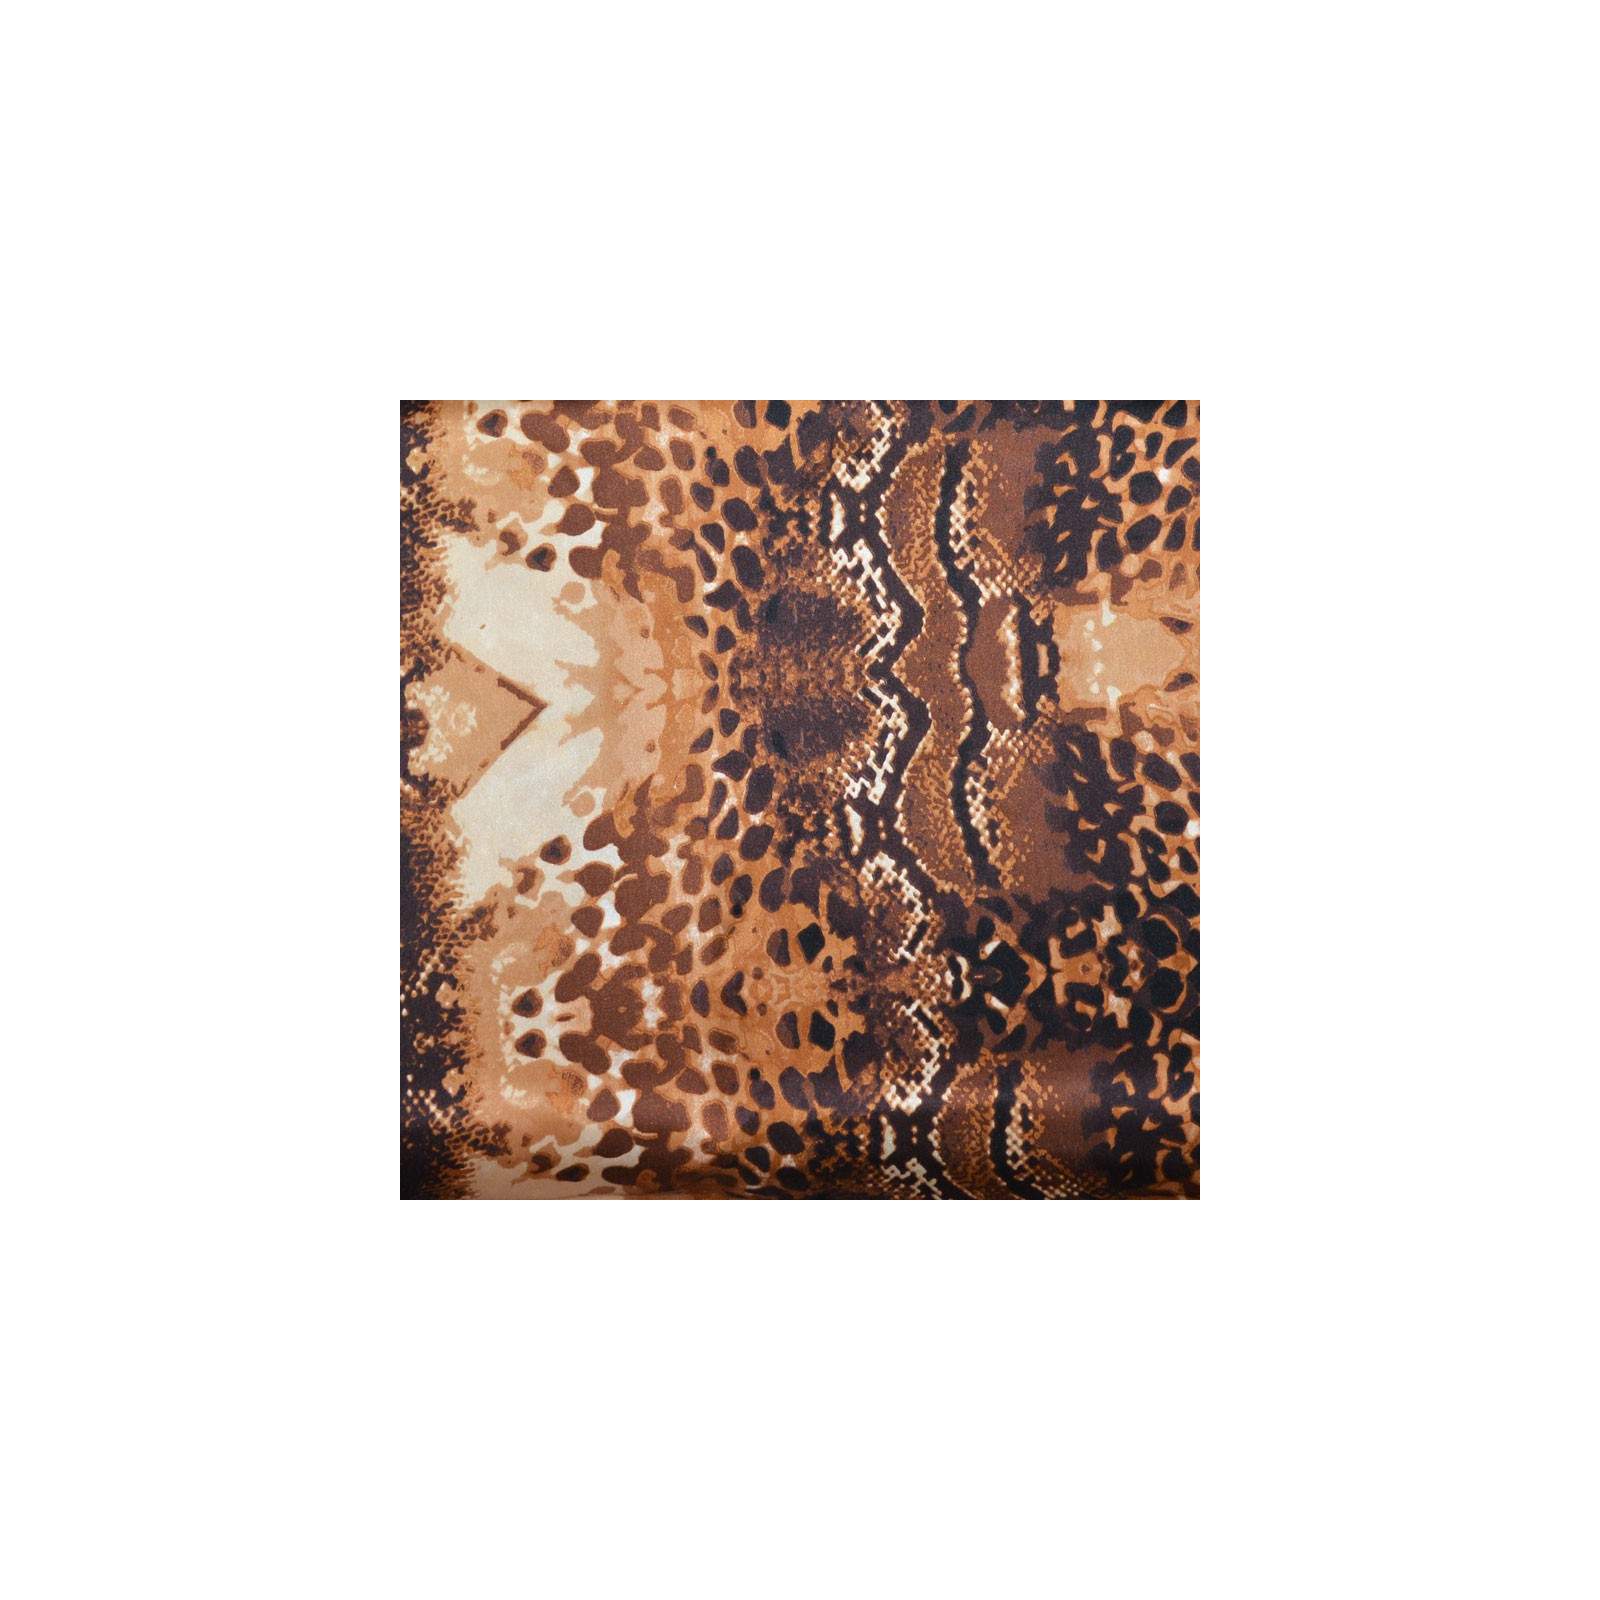 Tissu Satin de Soie imprimé serpent marron